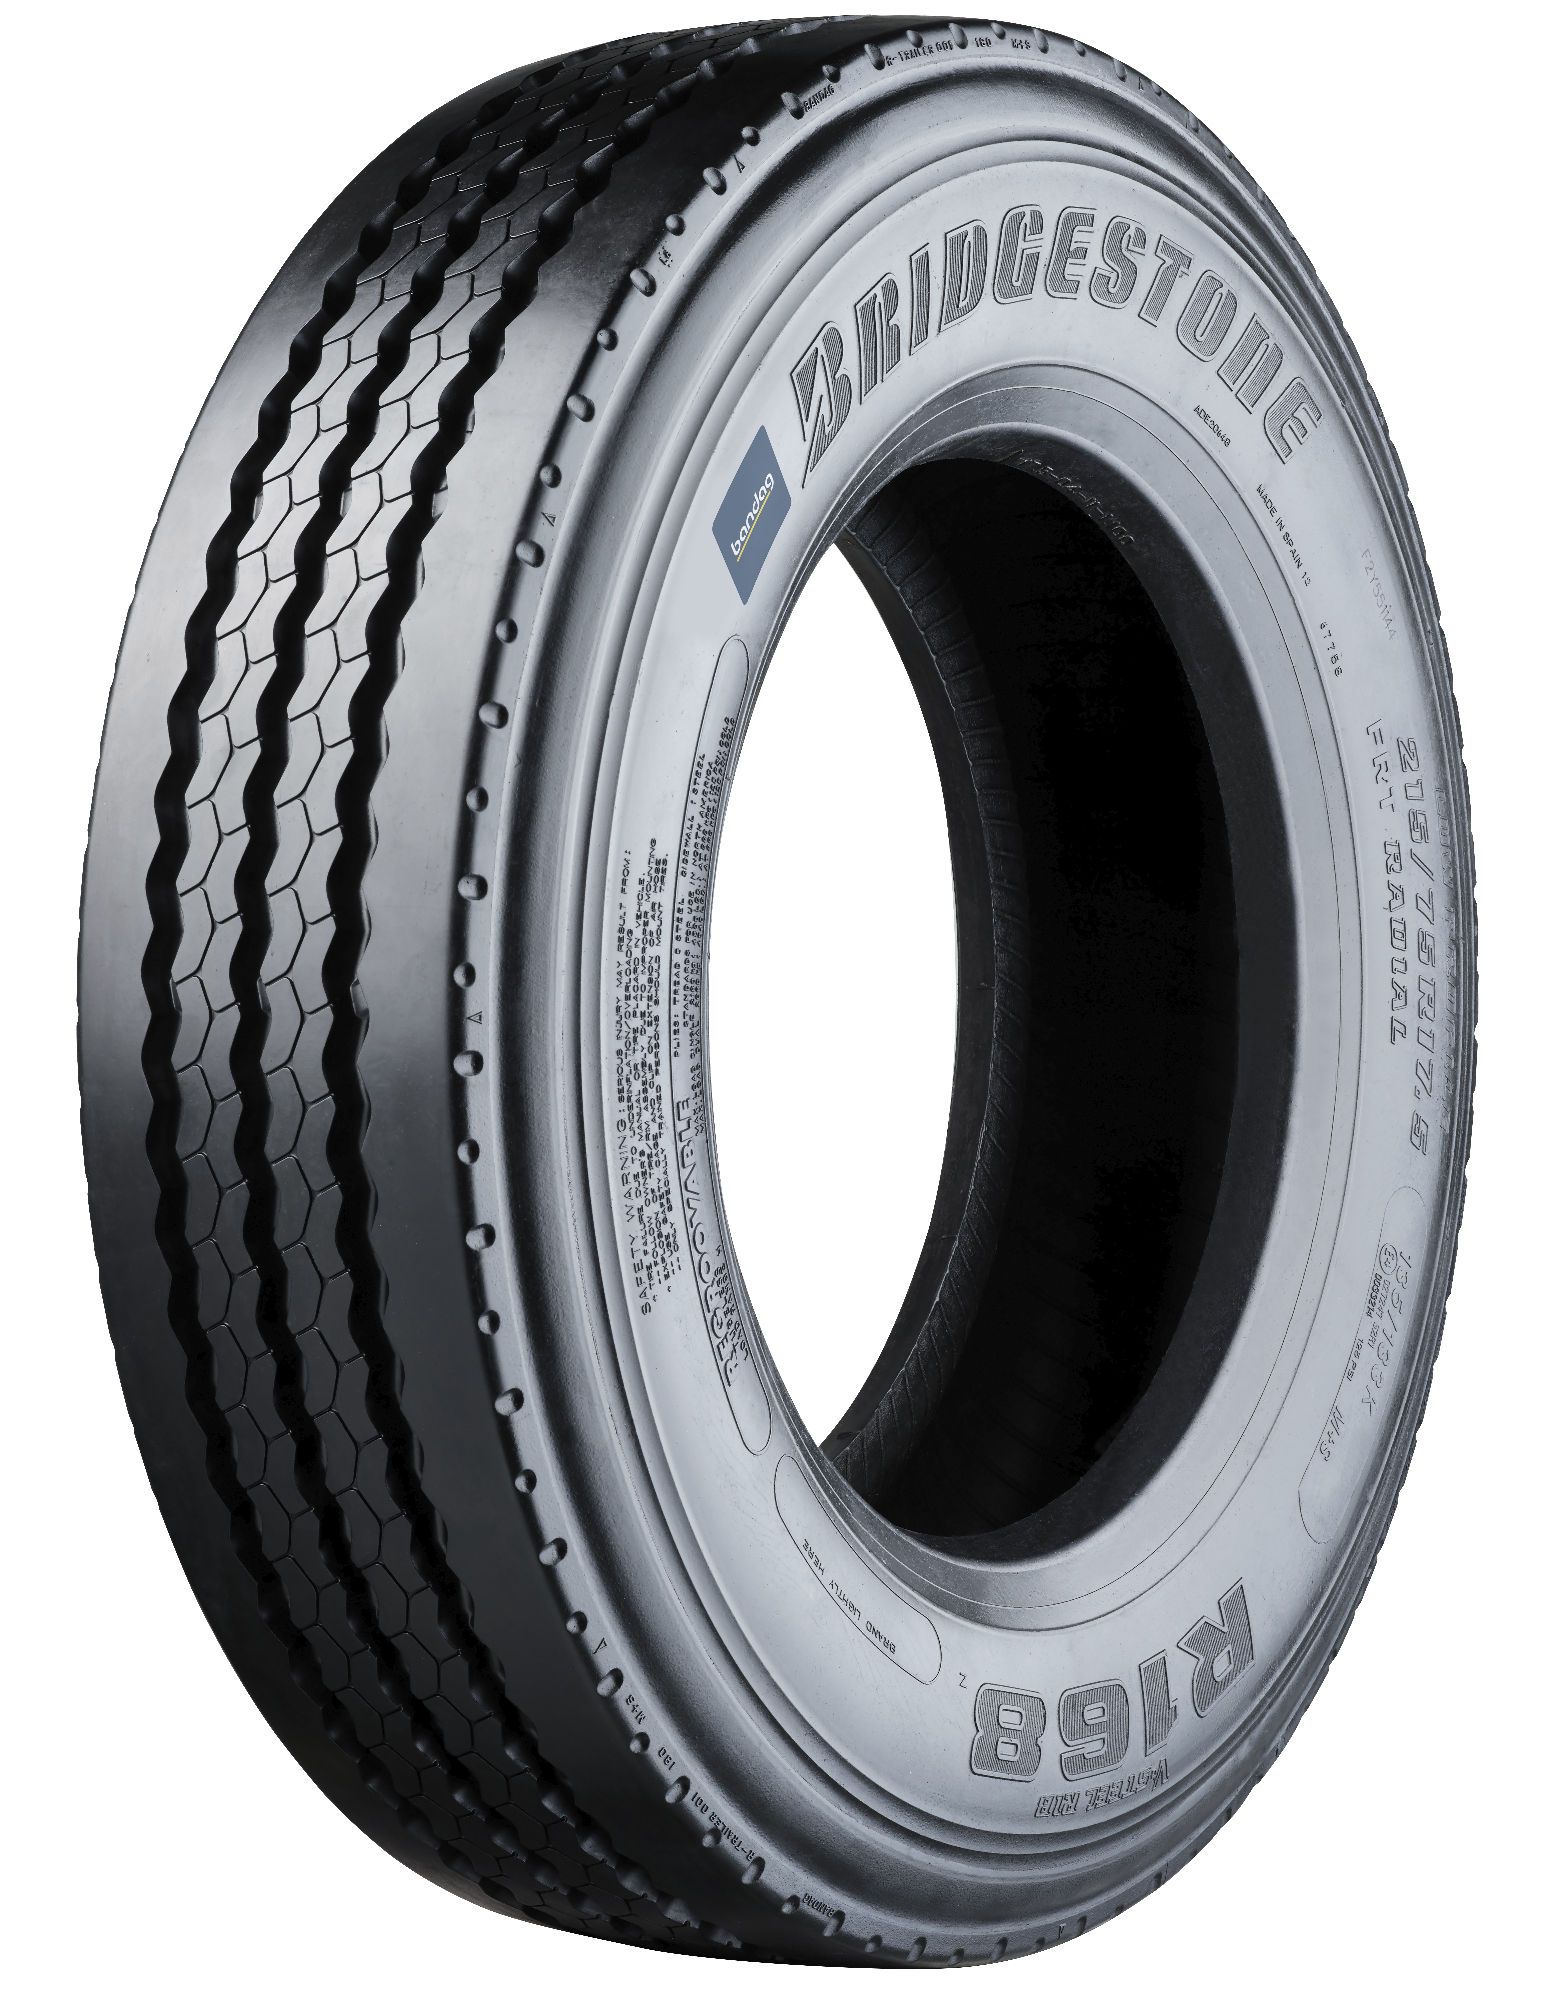 Gomme Nuove Bridgestone 265/70 R19.5 143/141K R-TRAILER 001 M+S (8.00mm) pneumatici nuovi Estivo